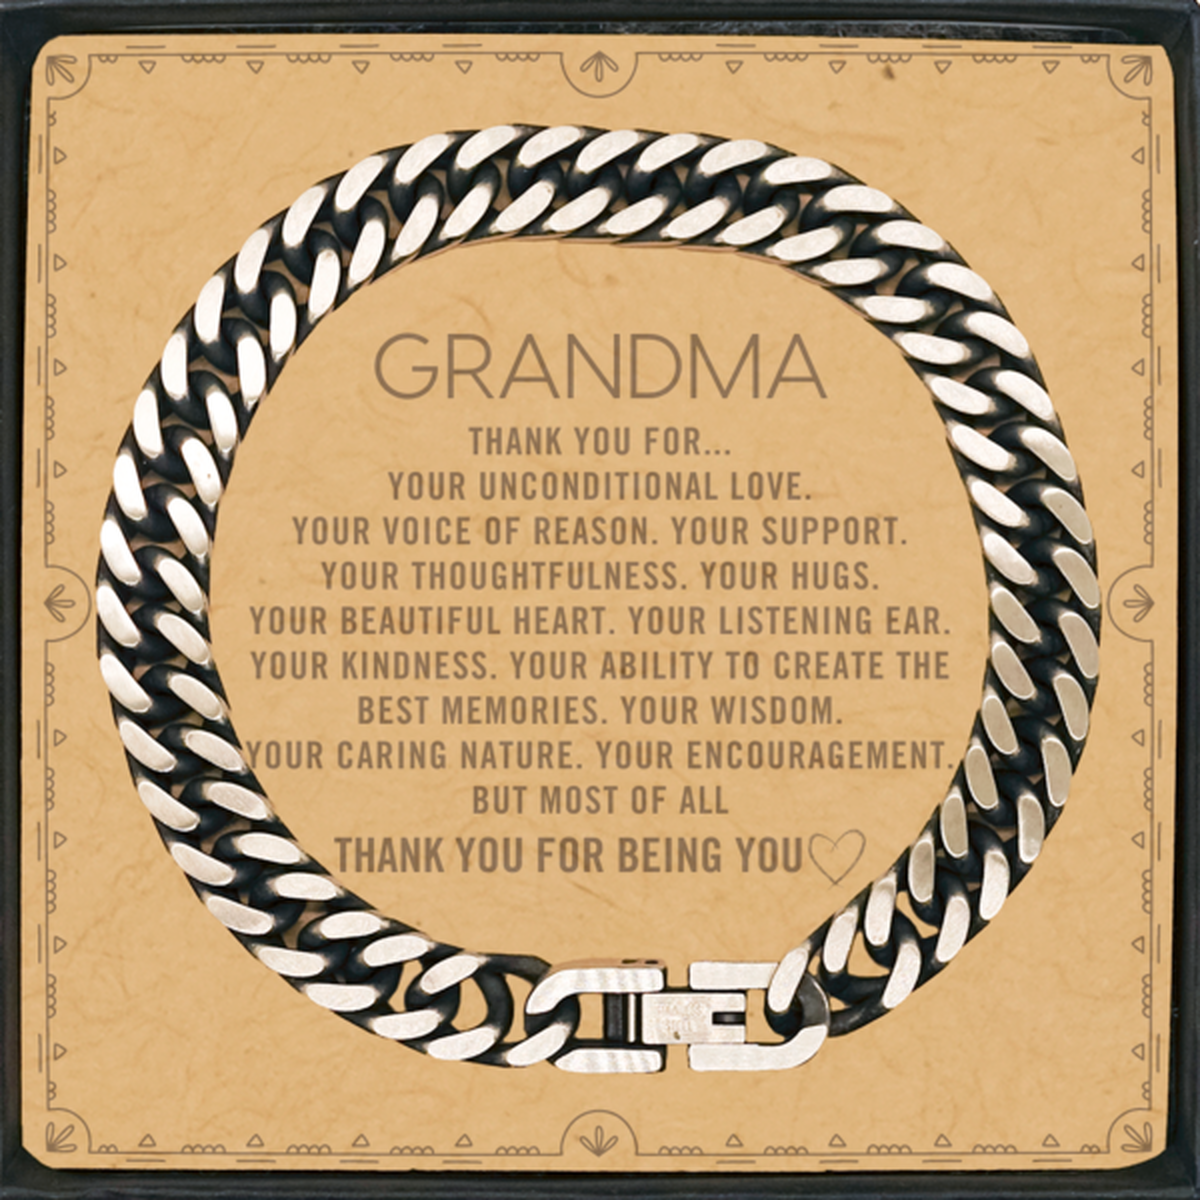 Grandma Cuban Link Chain Bracelet Custom, Message Card Gifts For Grandma Christmas Graduation Birthday Gifts for Men Women Grandma Thank you for Your unconditional love